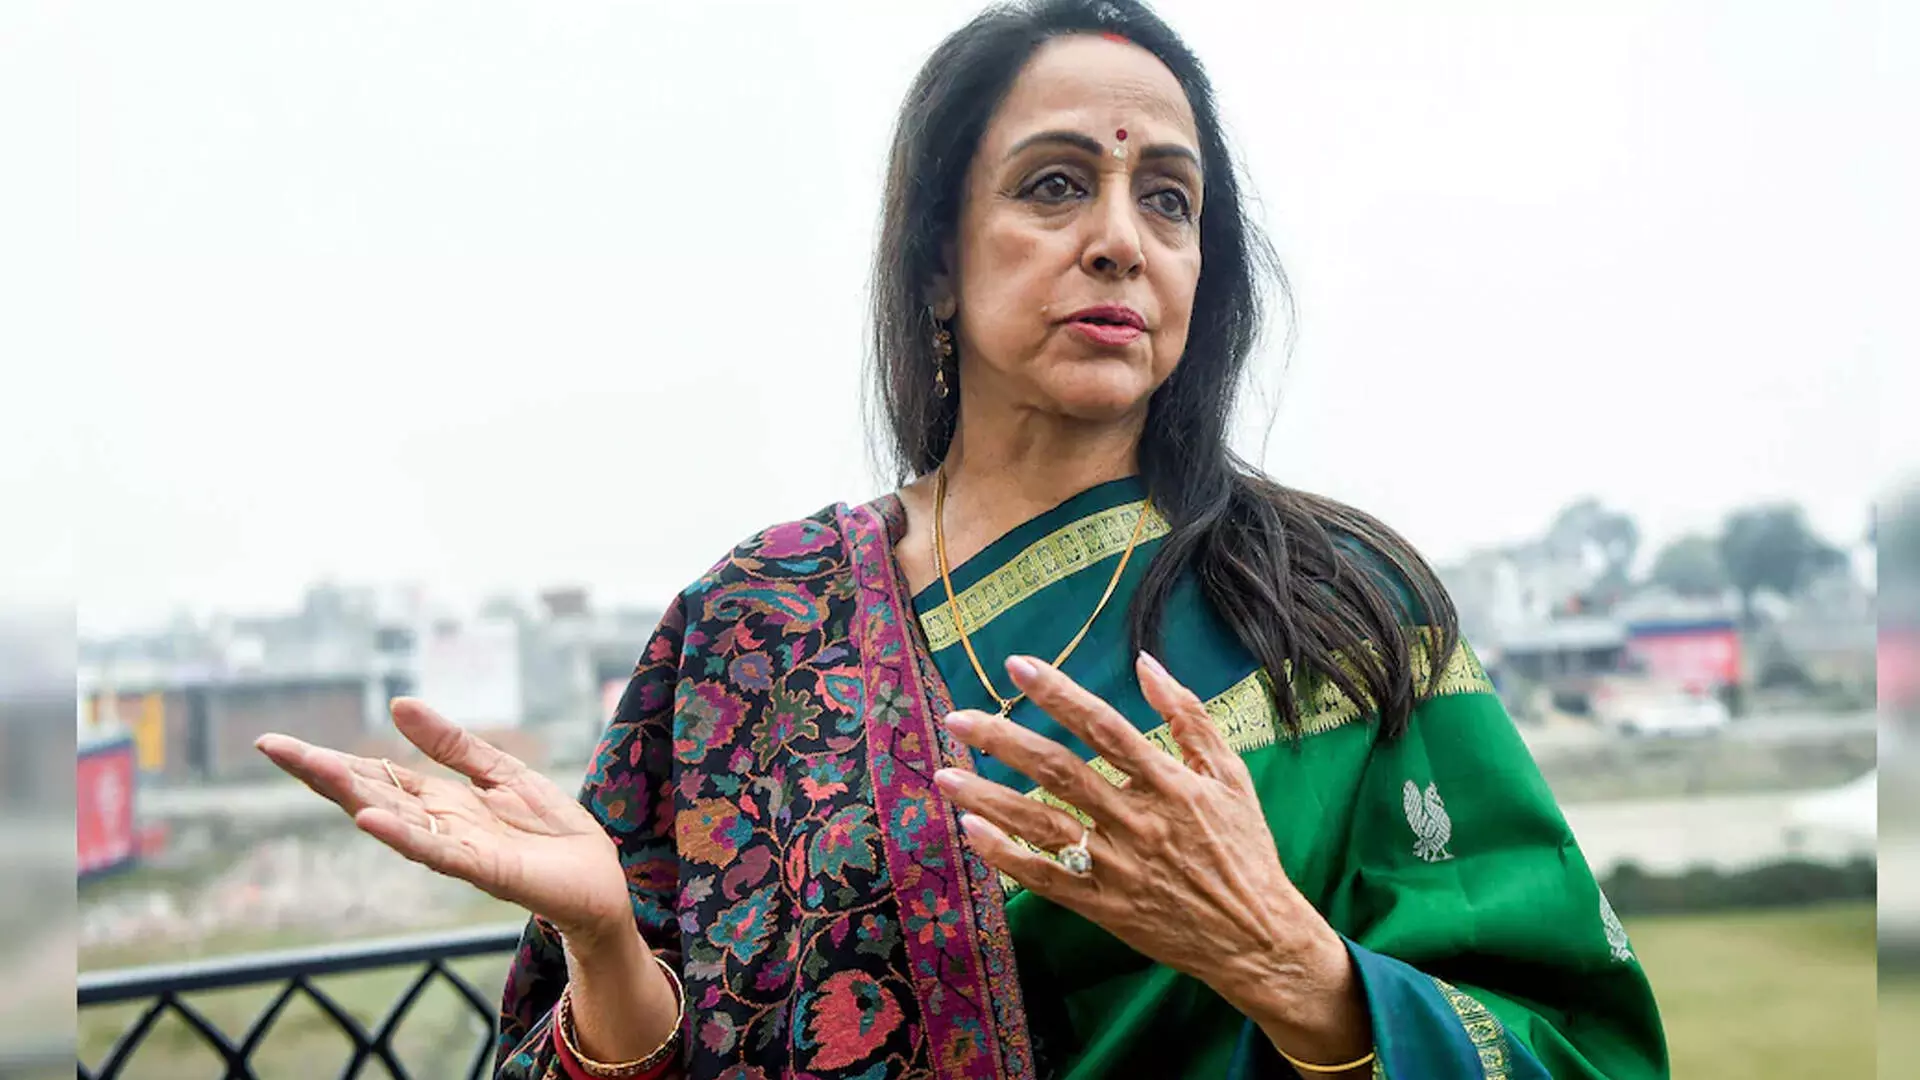 मथुरा नहीं होता तो चुनाव नहीं लड़ती: बीजेपी सांसद हेमा मालिनी